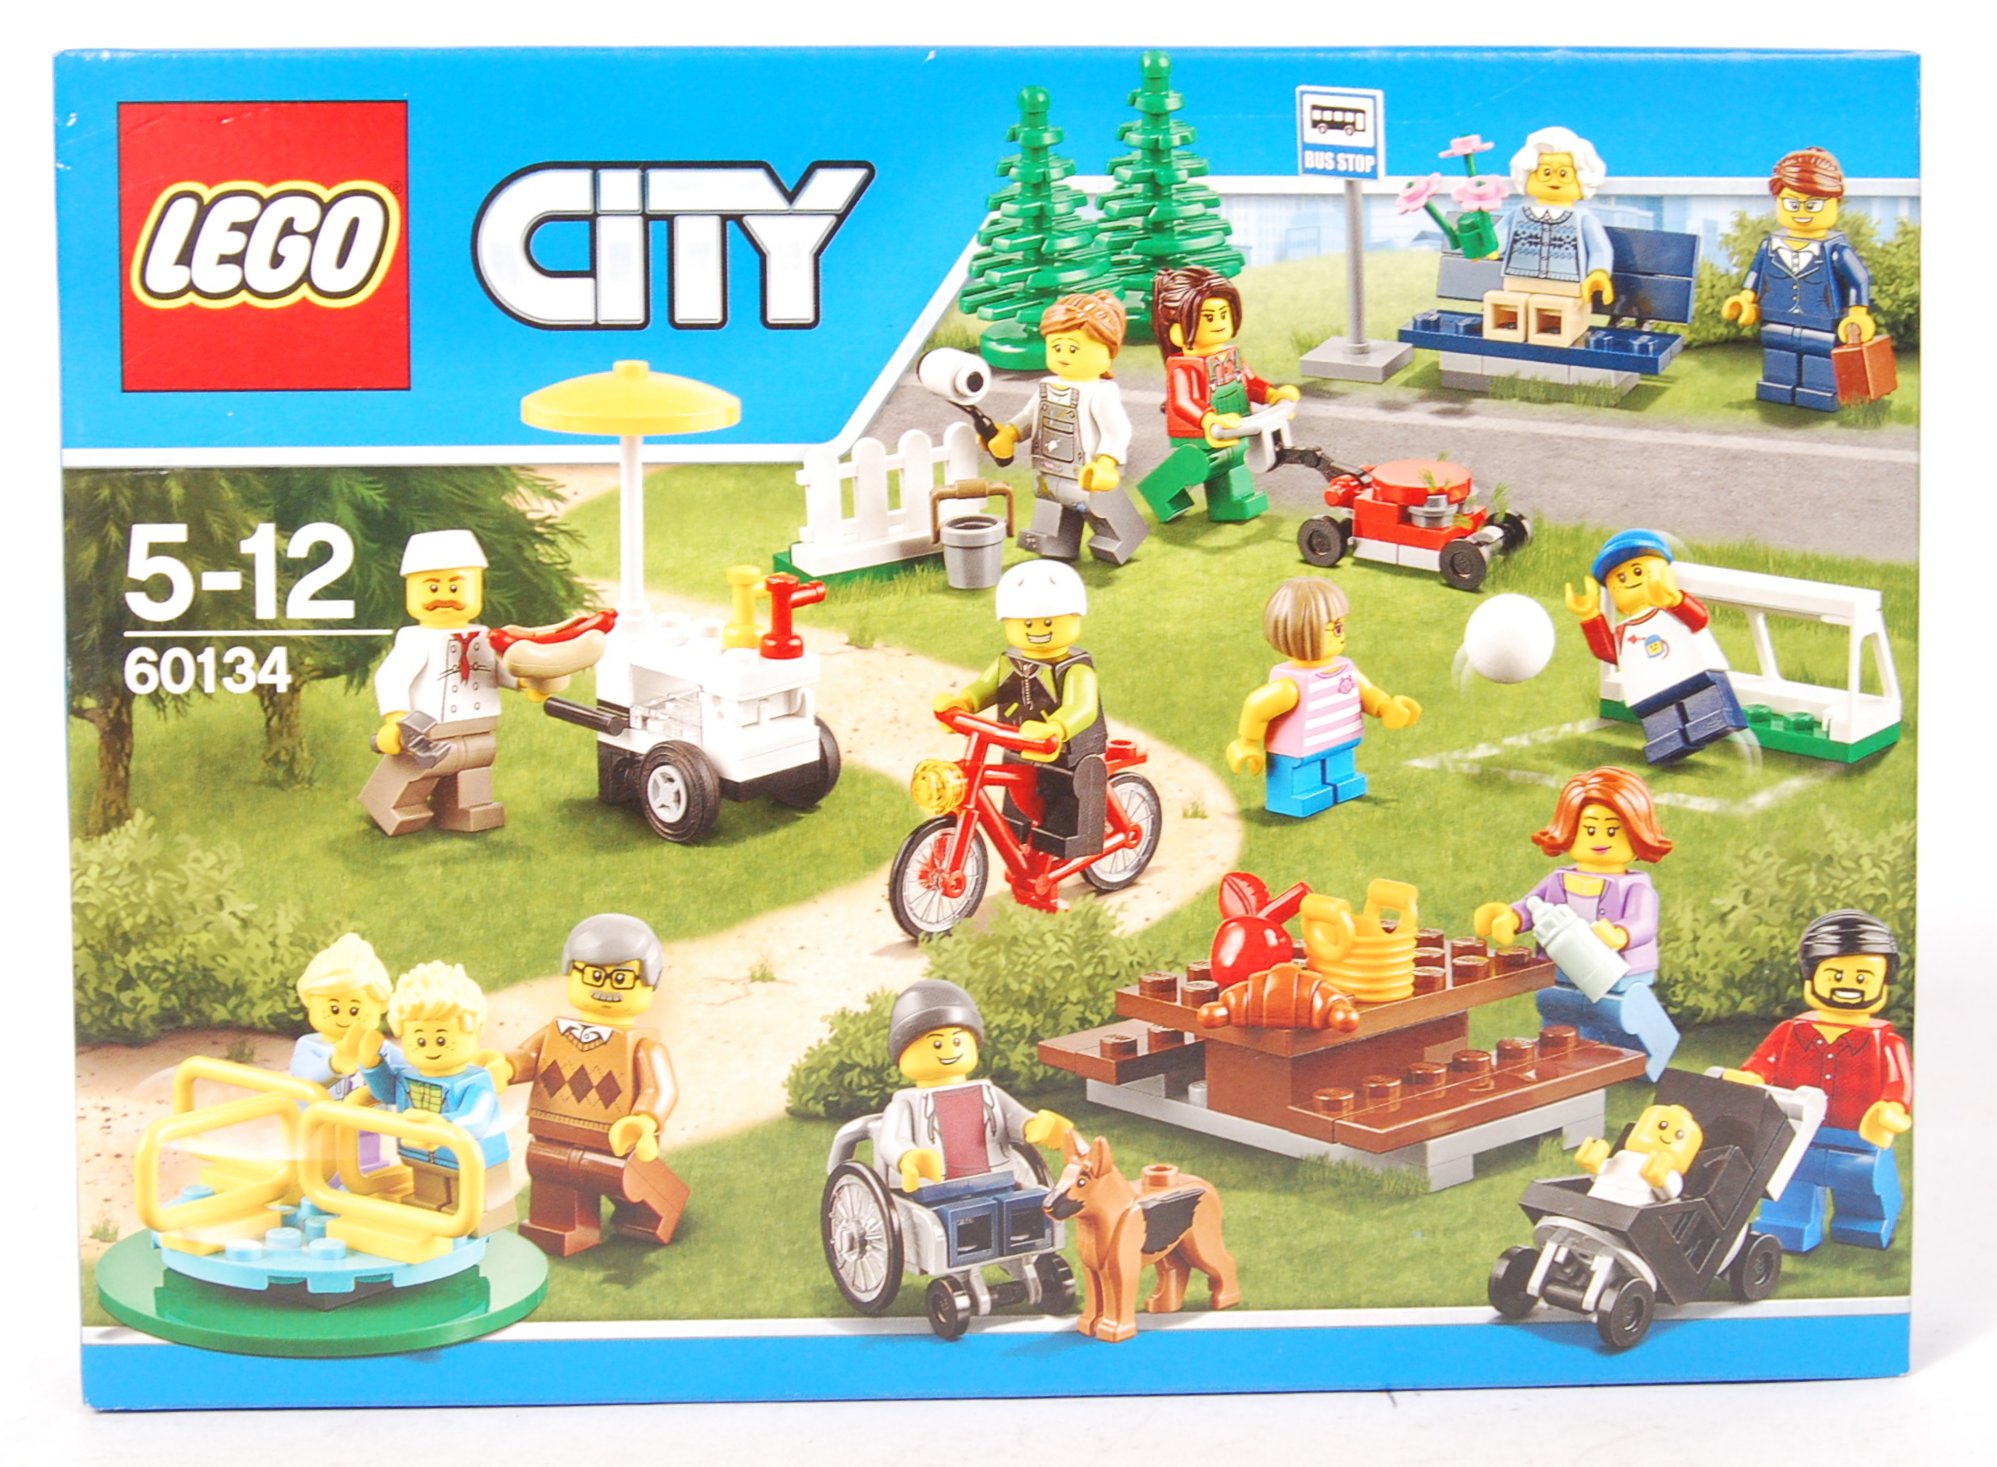 LEGO CITY SET NO. 60134 FUN IN THE PARK